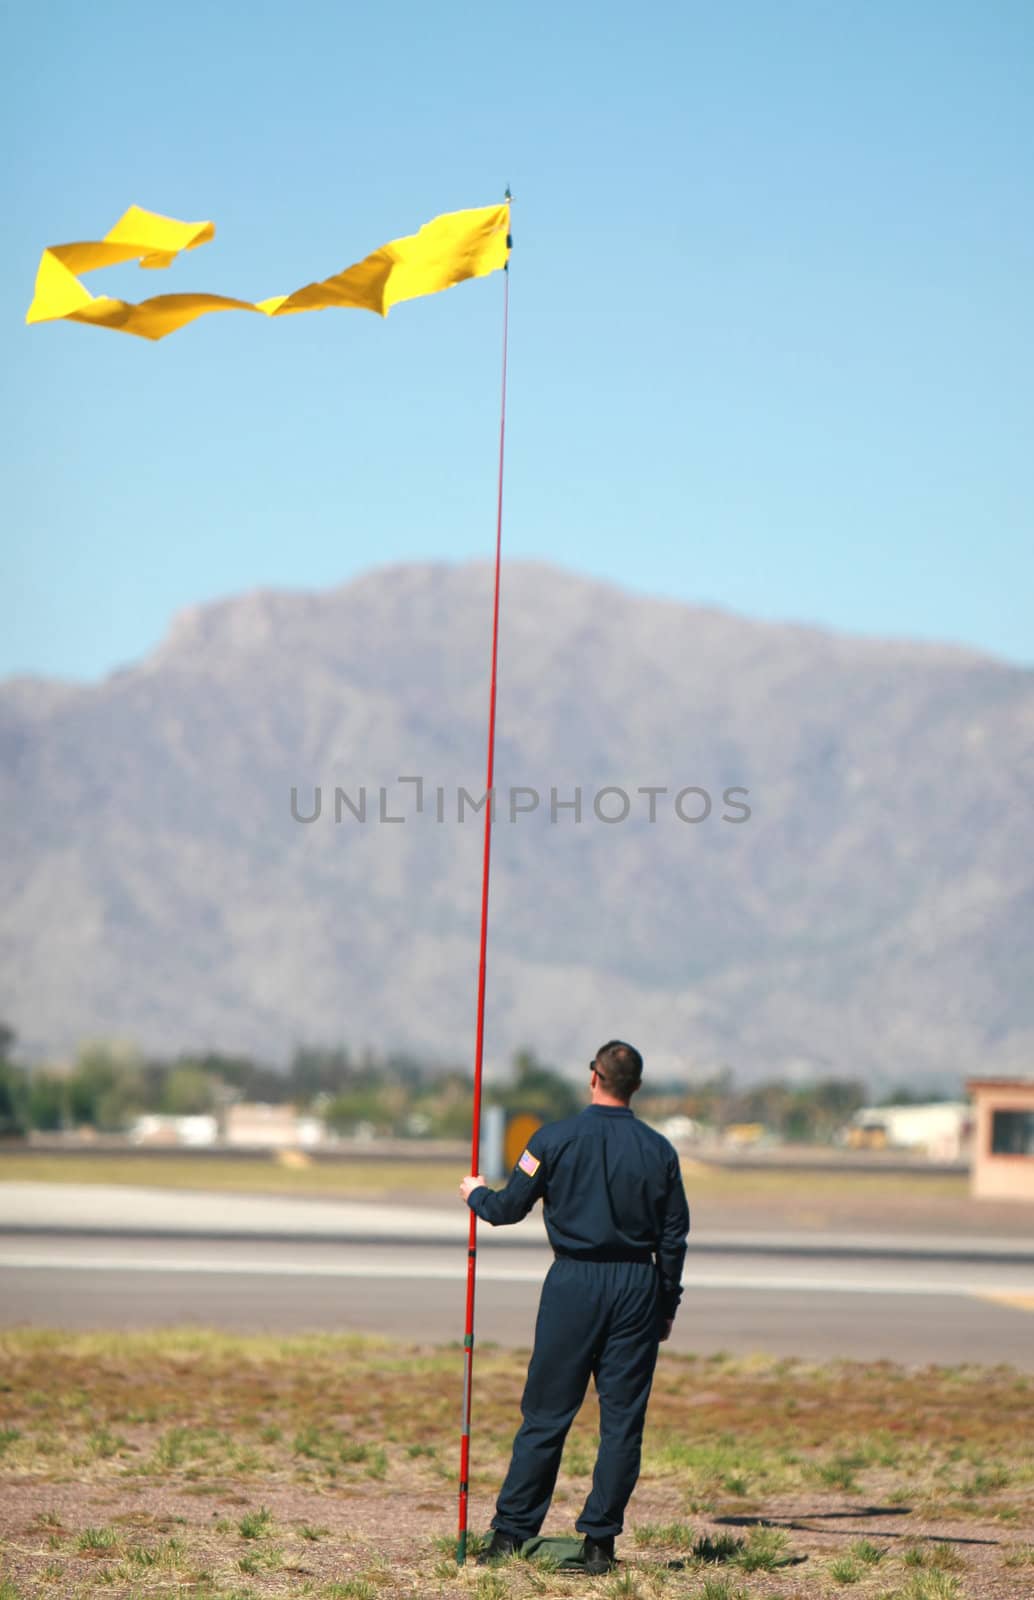 A flagman checks the wind direction so aid the landing of an airplane along an airstrip